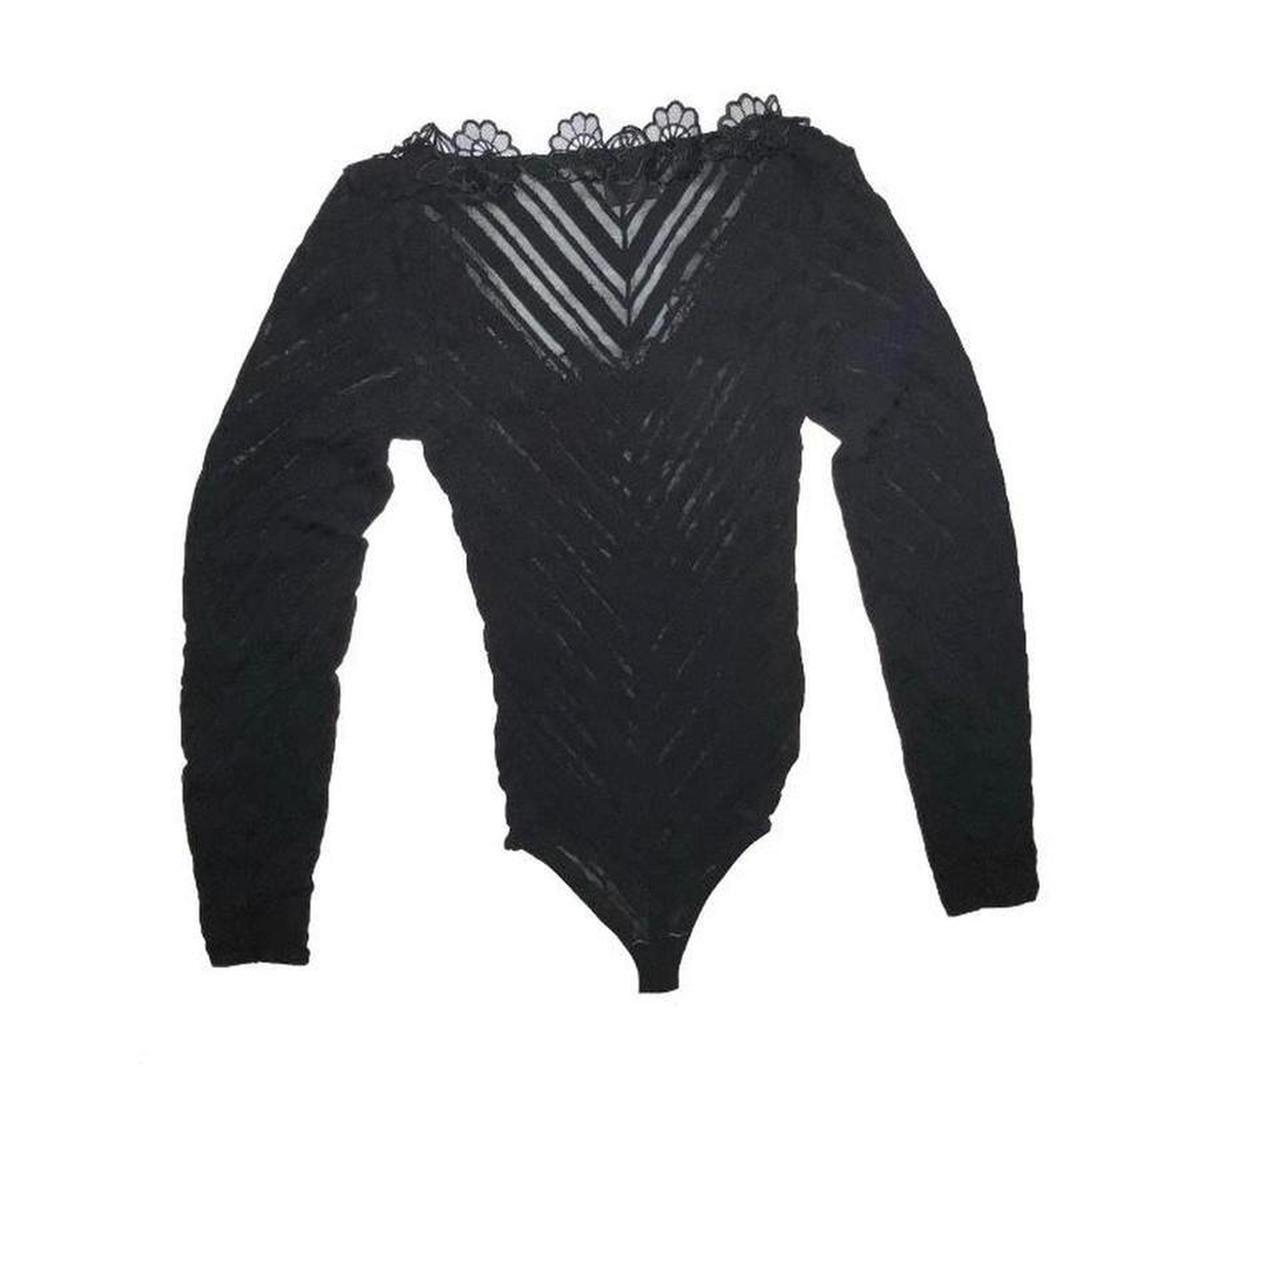 Wolford Women's Black Bodysuit (2)